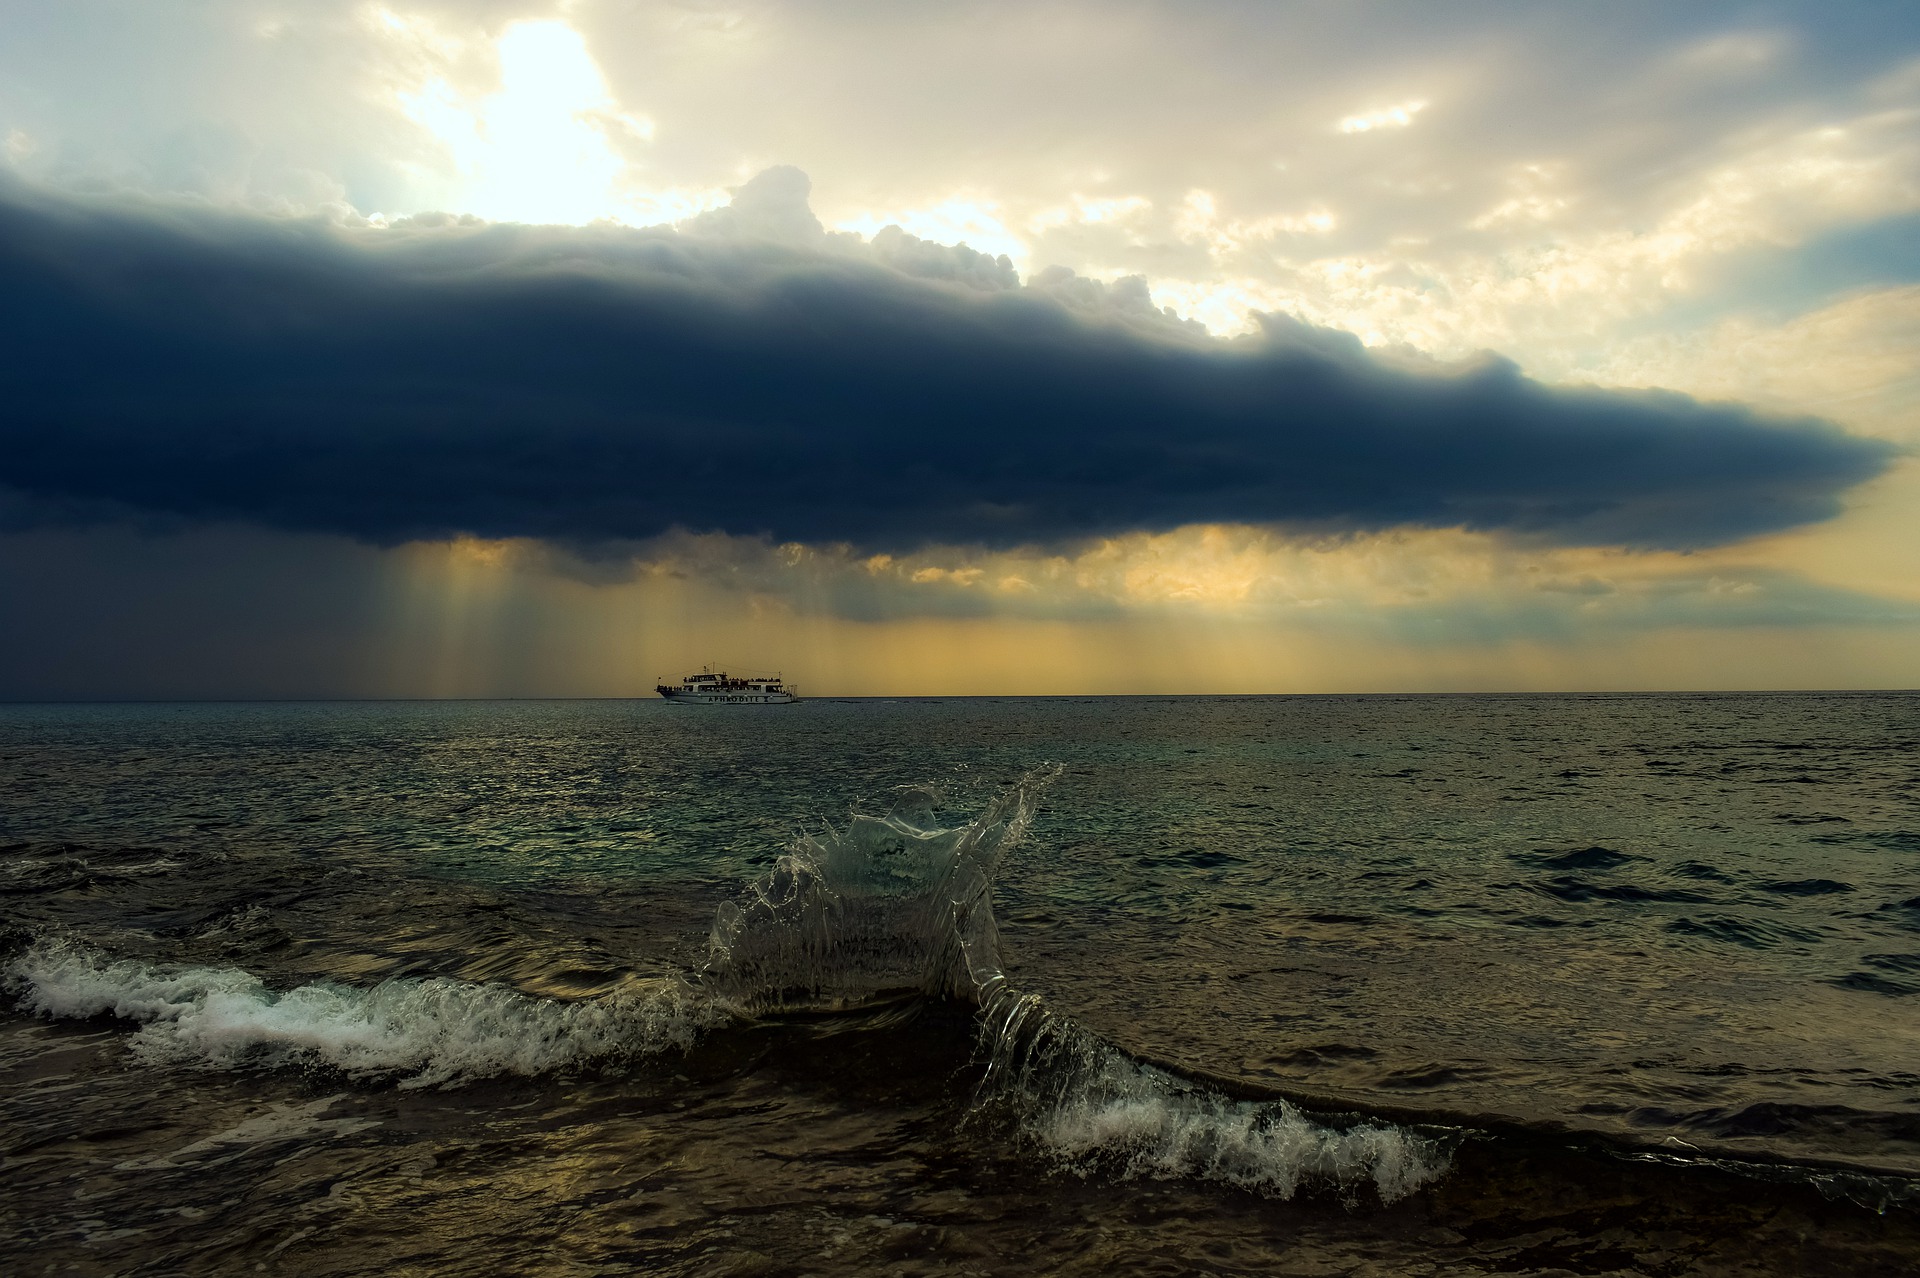 Passenger: storm at sea - Image by Dimitris Vetsikas from Pixabay